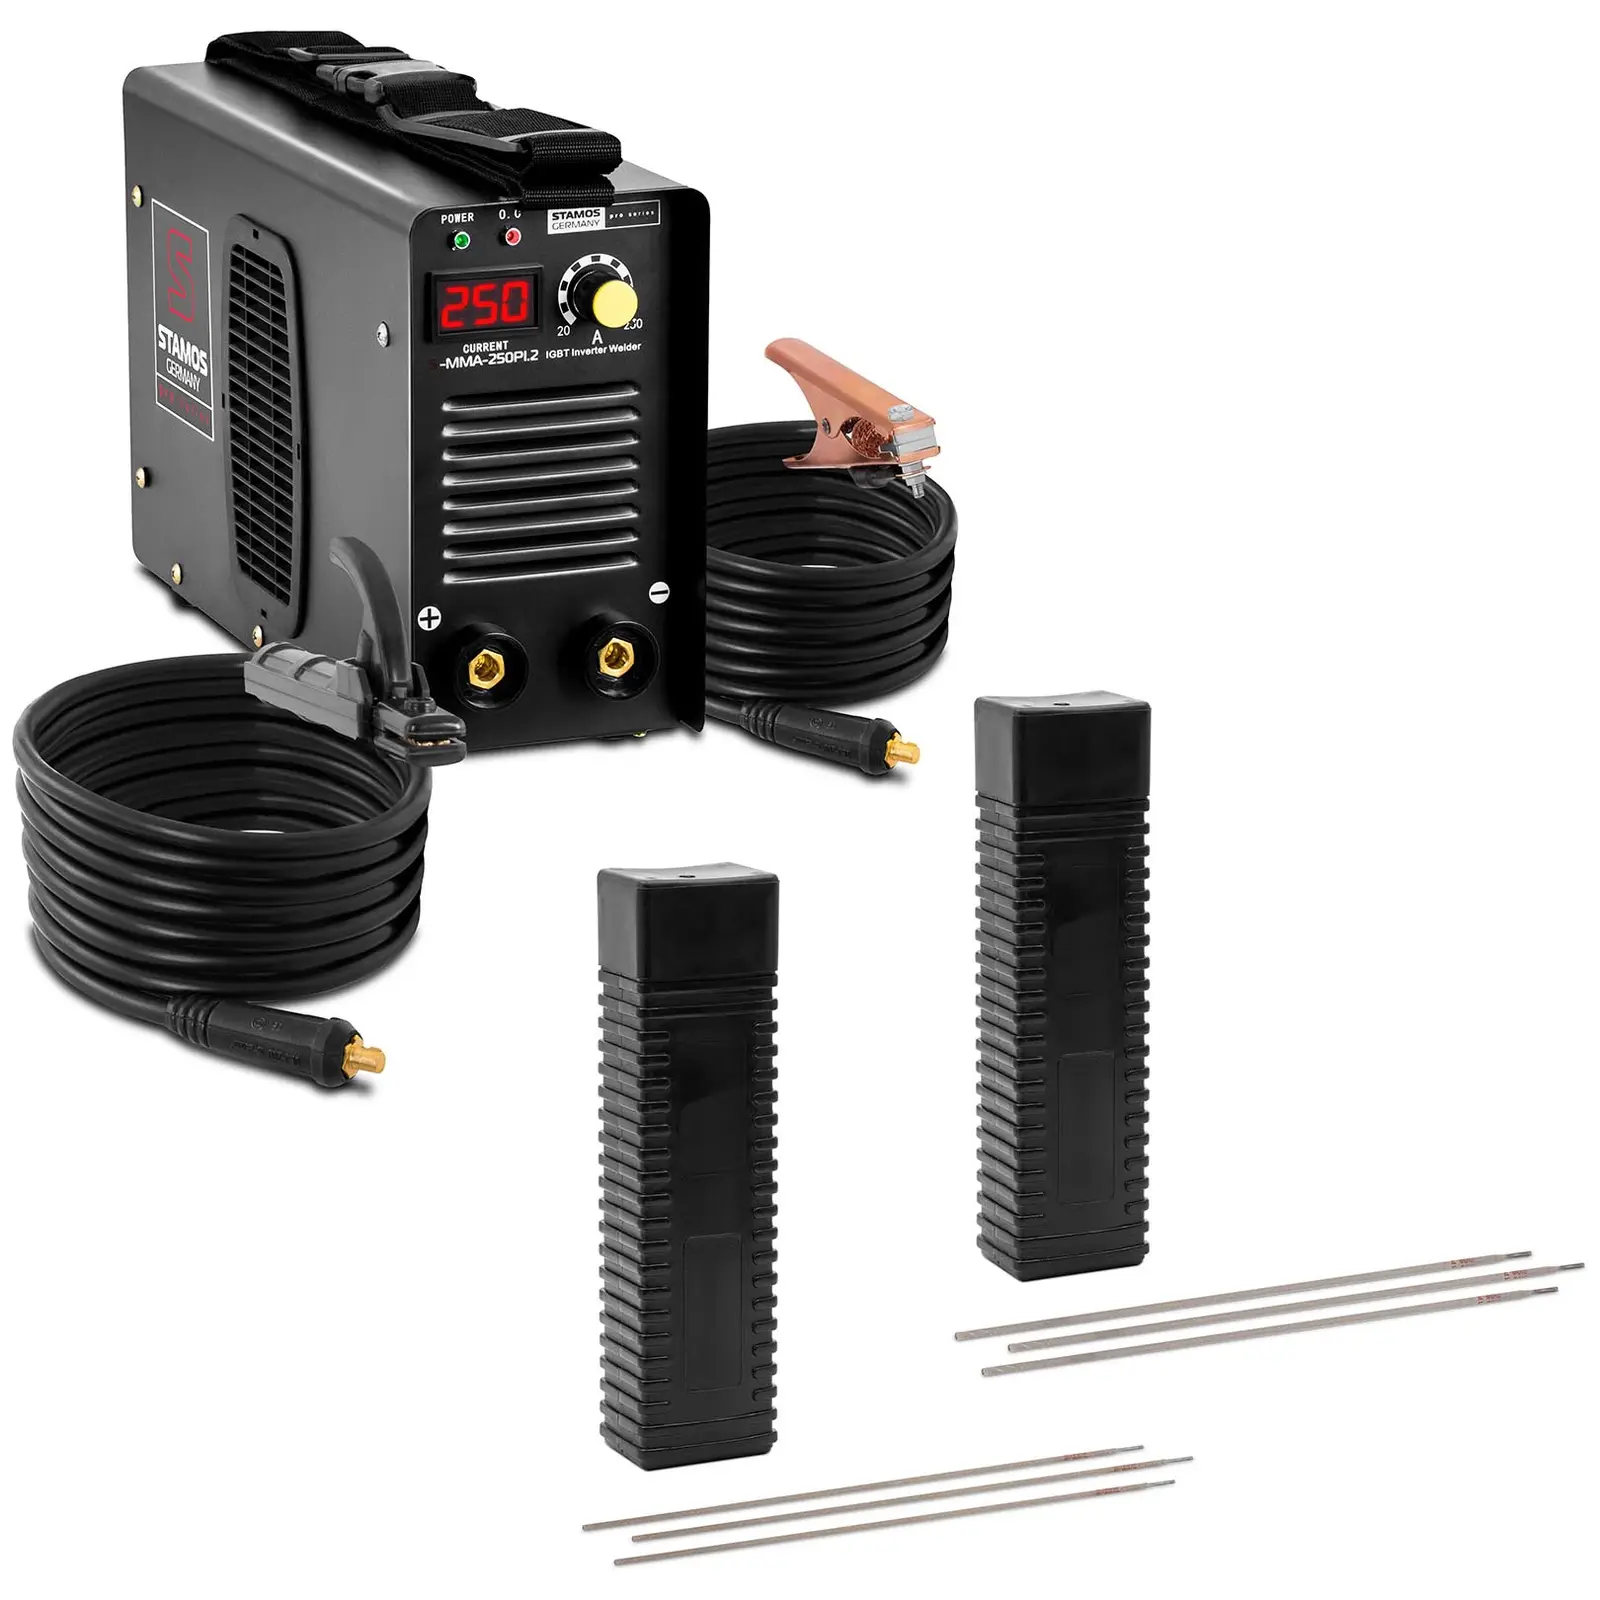 Svetsset elektroder svetsmaskin - 250 A - 8 m kabel - 60% arbetscykel - elektroder E6013 - Ø 2,5 x 350 mm - 5 kg & E6013 - Ø 3,2 x 350 mm - 5 kg